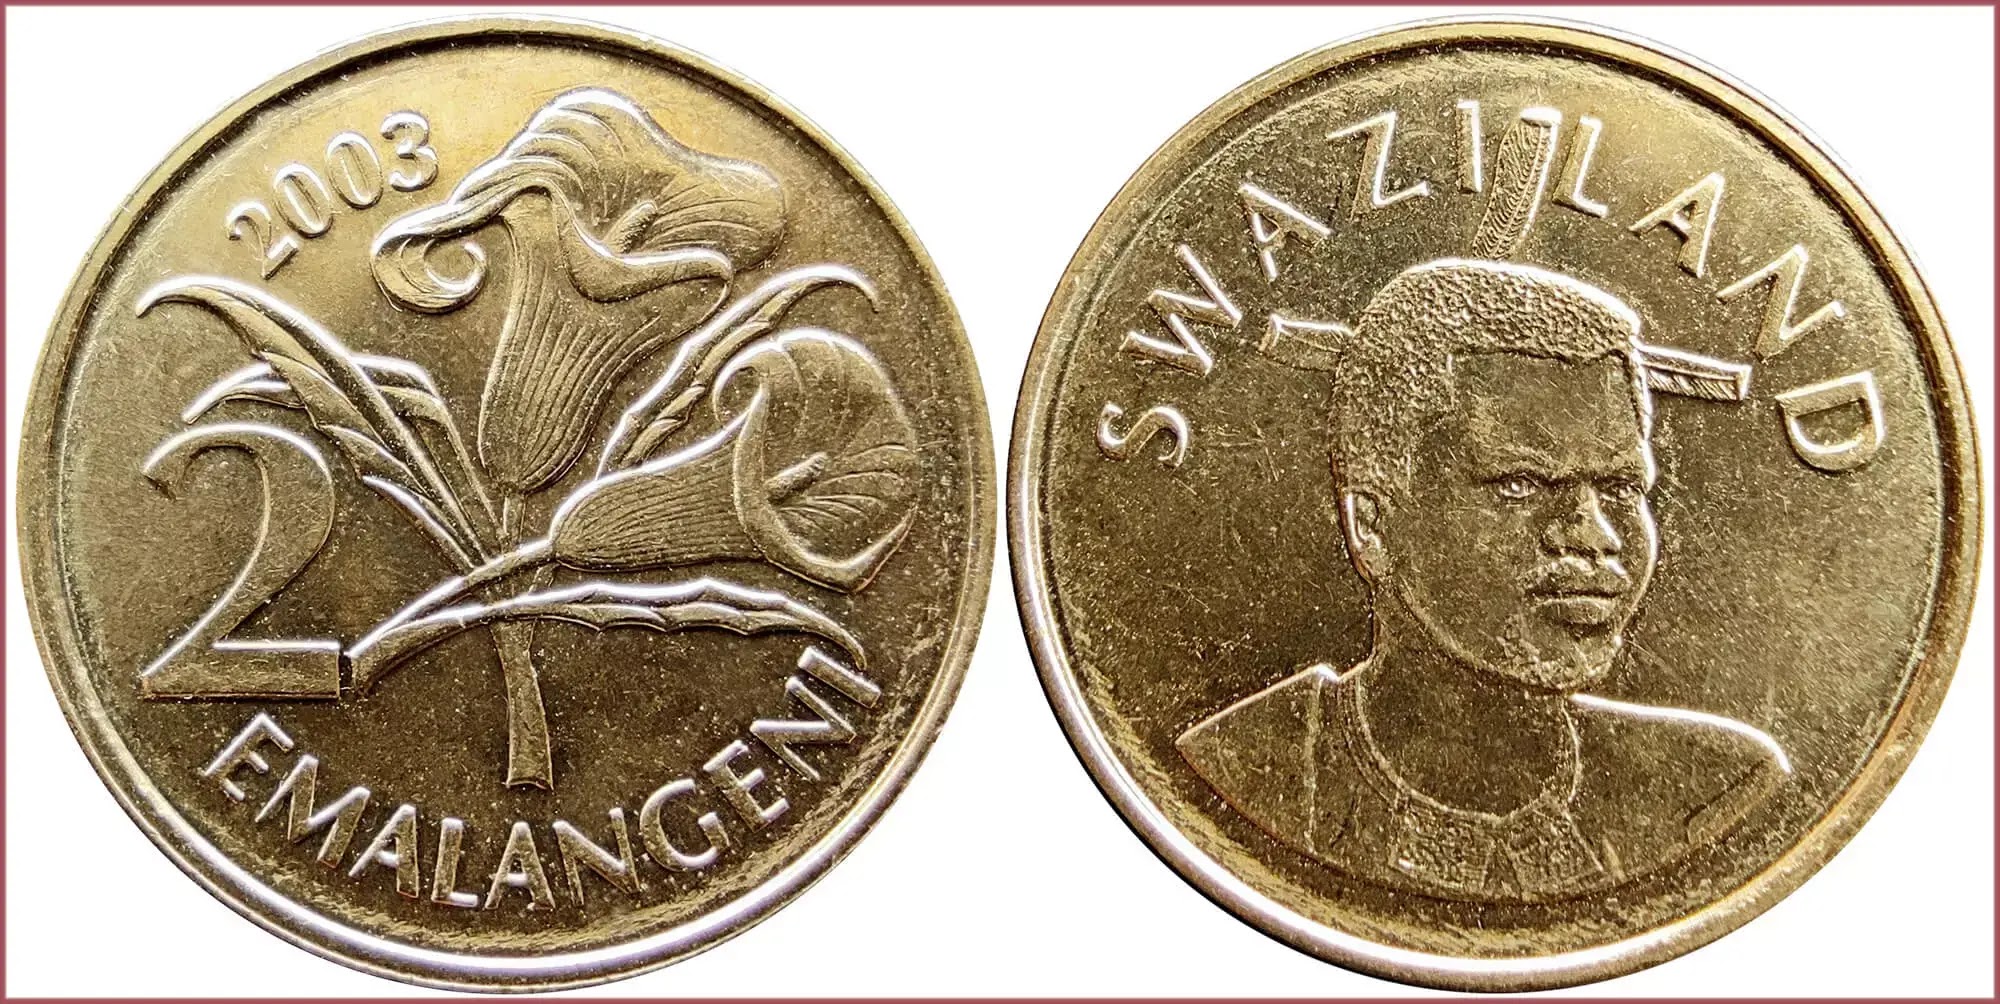 2 emalangeni /lilangeni/, 2003: Kingdom of Swaziland